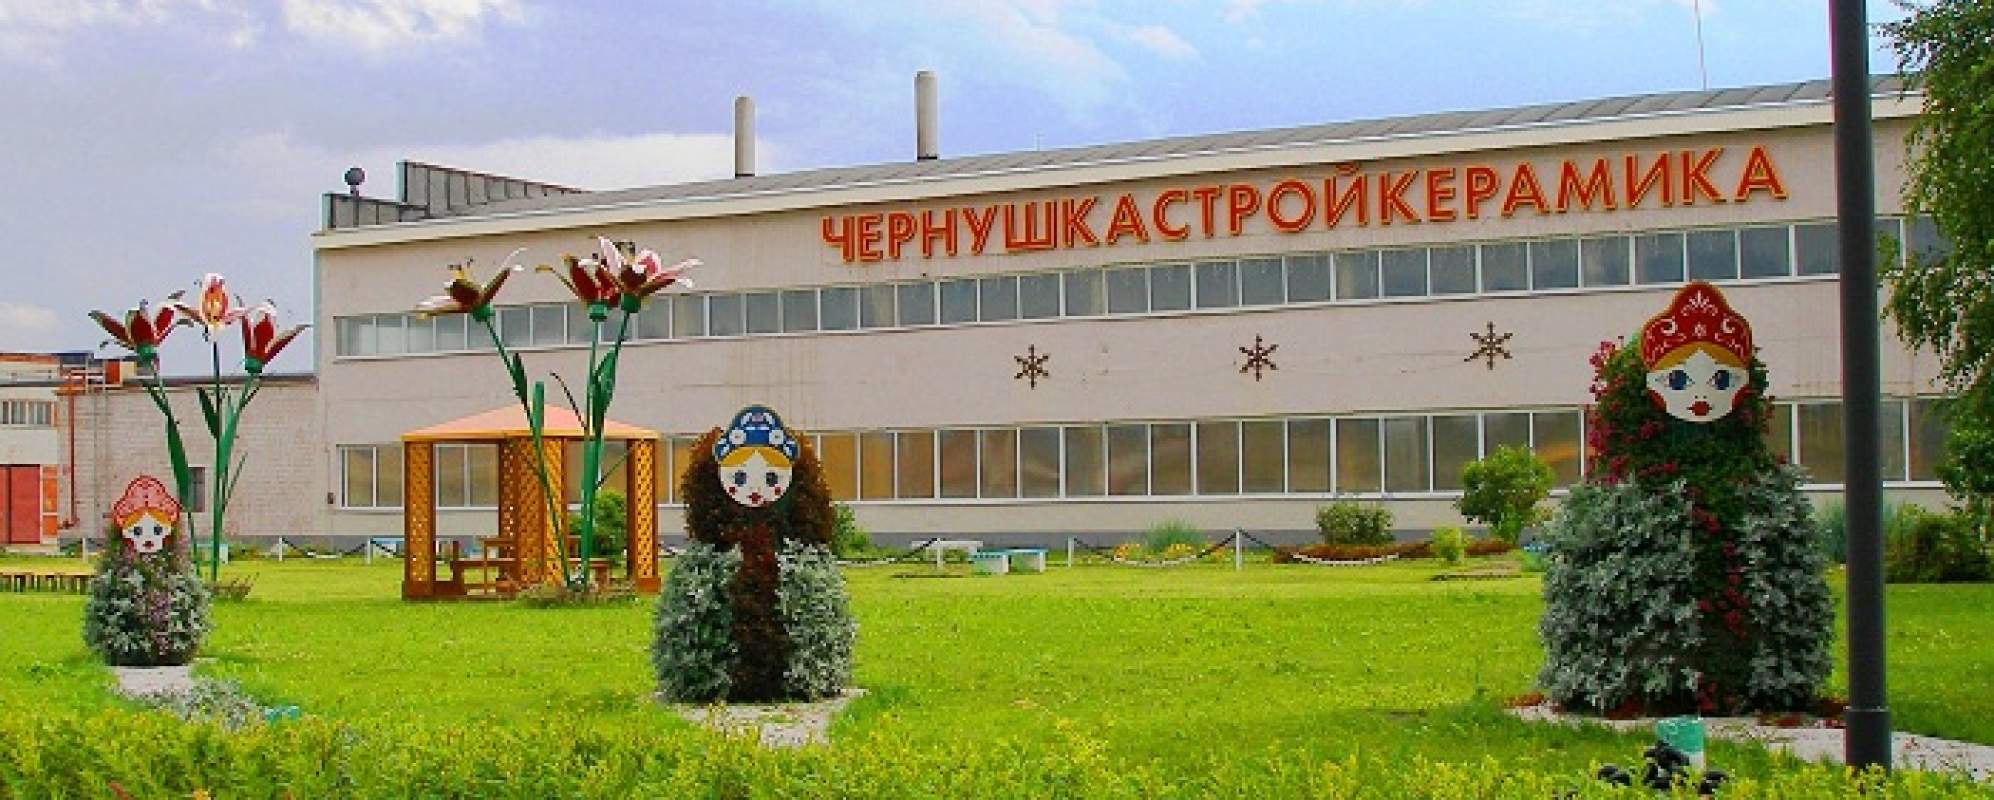 Фотографии предприятий Чернушкастройкерамика